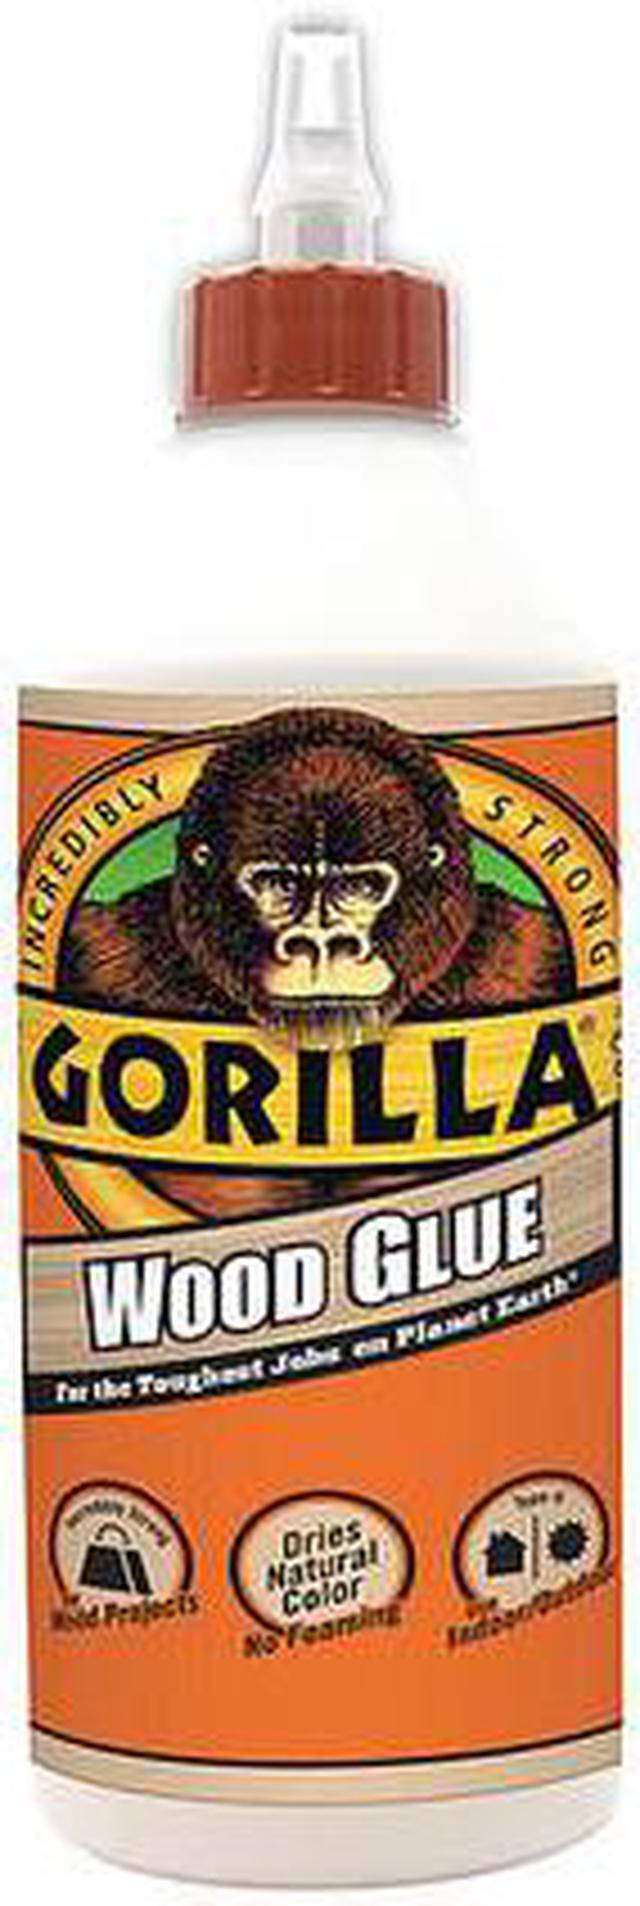 Gorilla 36 Oz. Wood Glue 6206001, 1 - Smith's Food and Drug